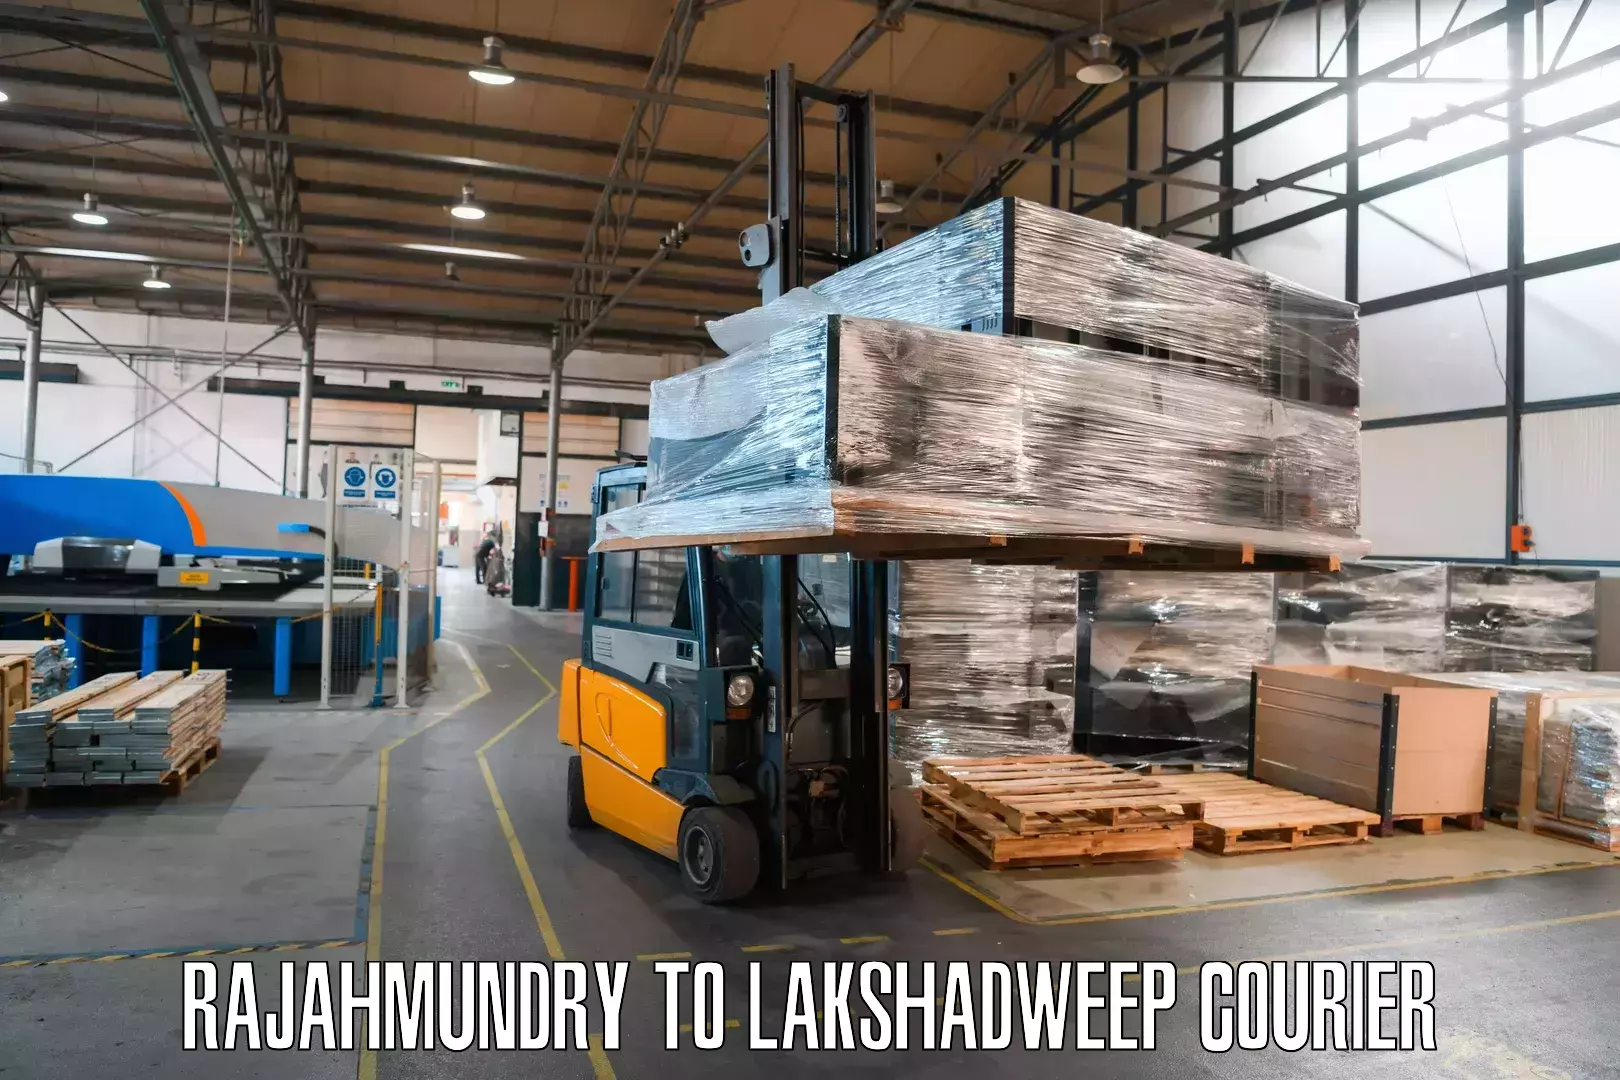 Express delivery network Rajahmundry to Lakshadweep